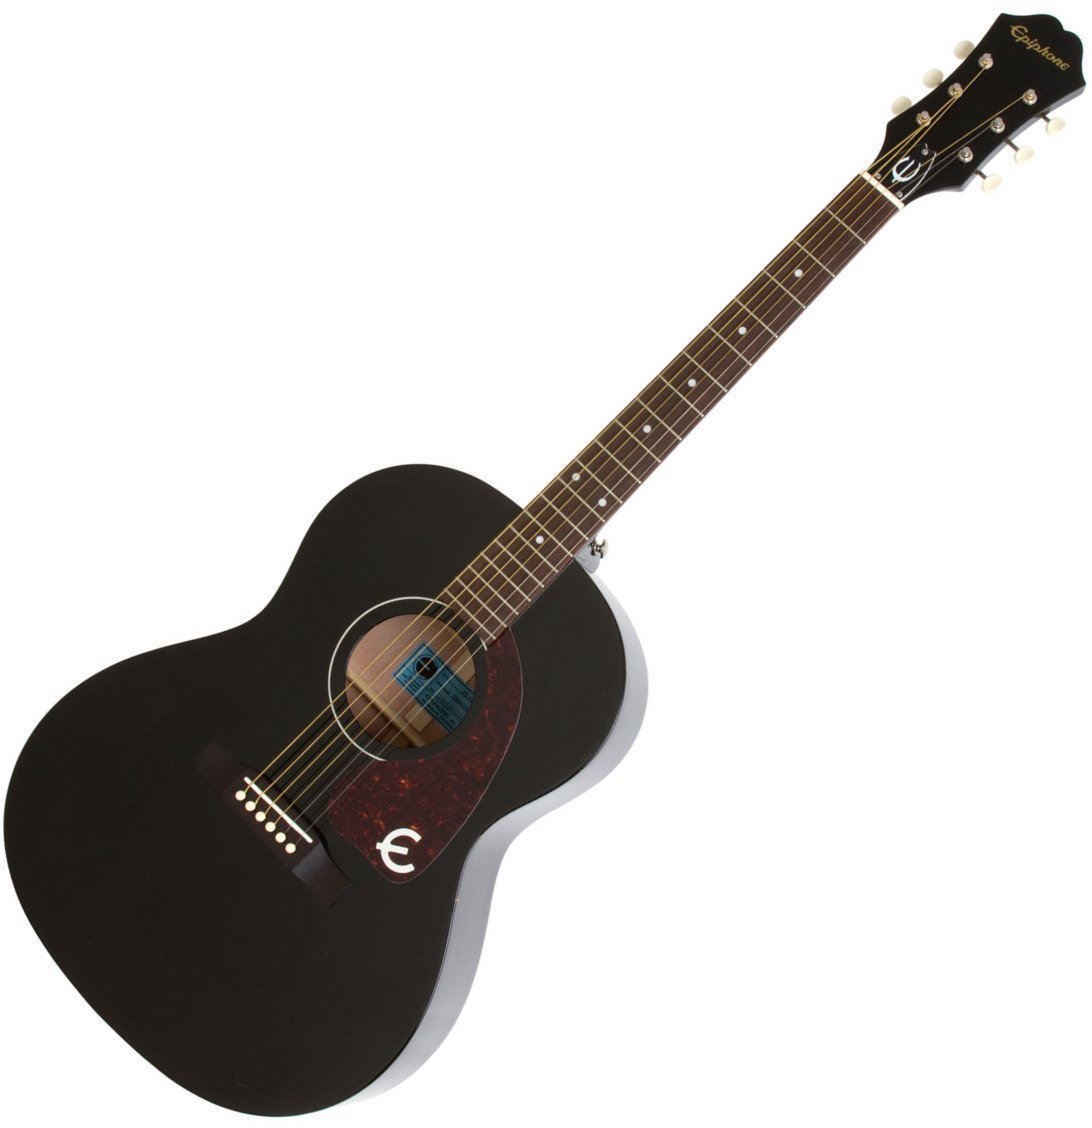 Electro-acoustic guitar Epiphone Caballero 50th Anniversary Black